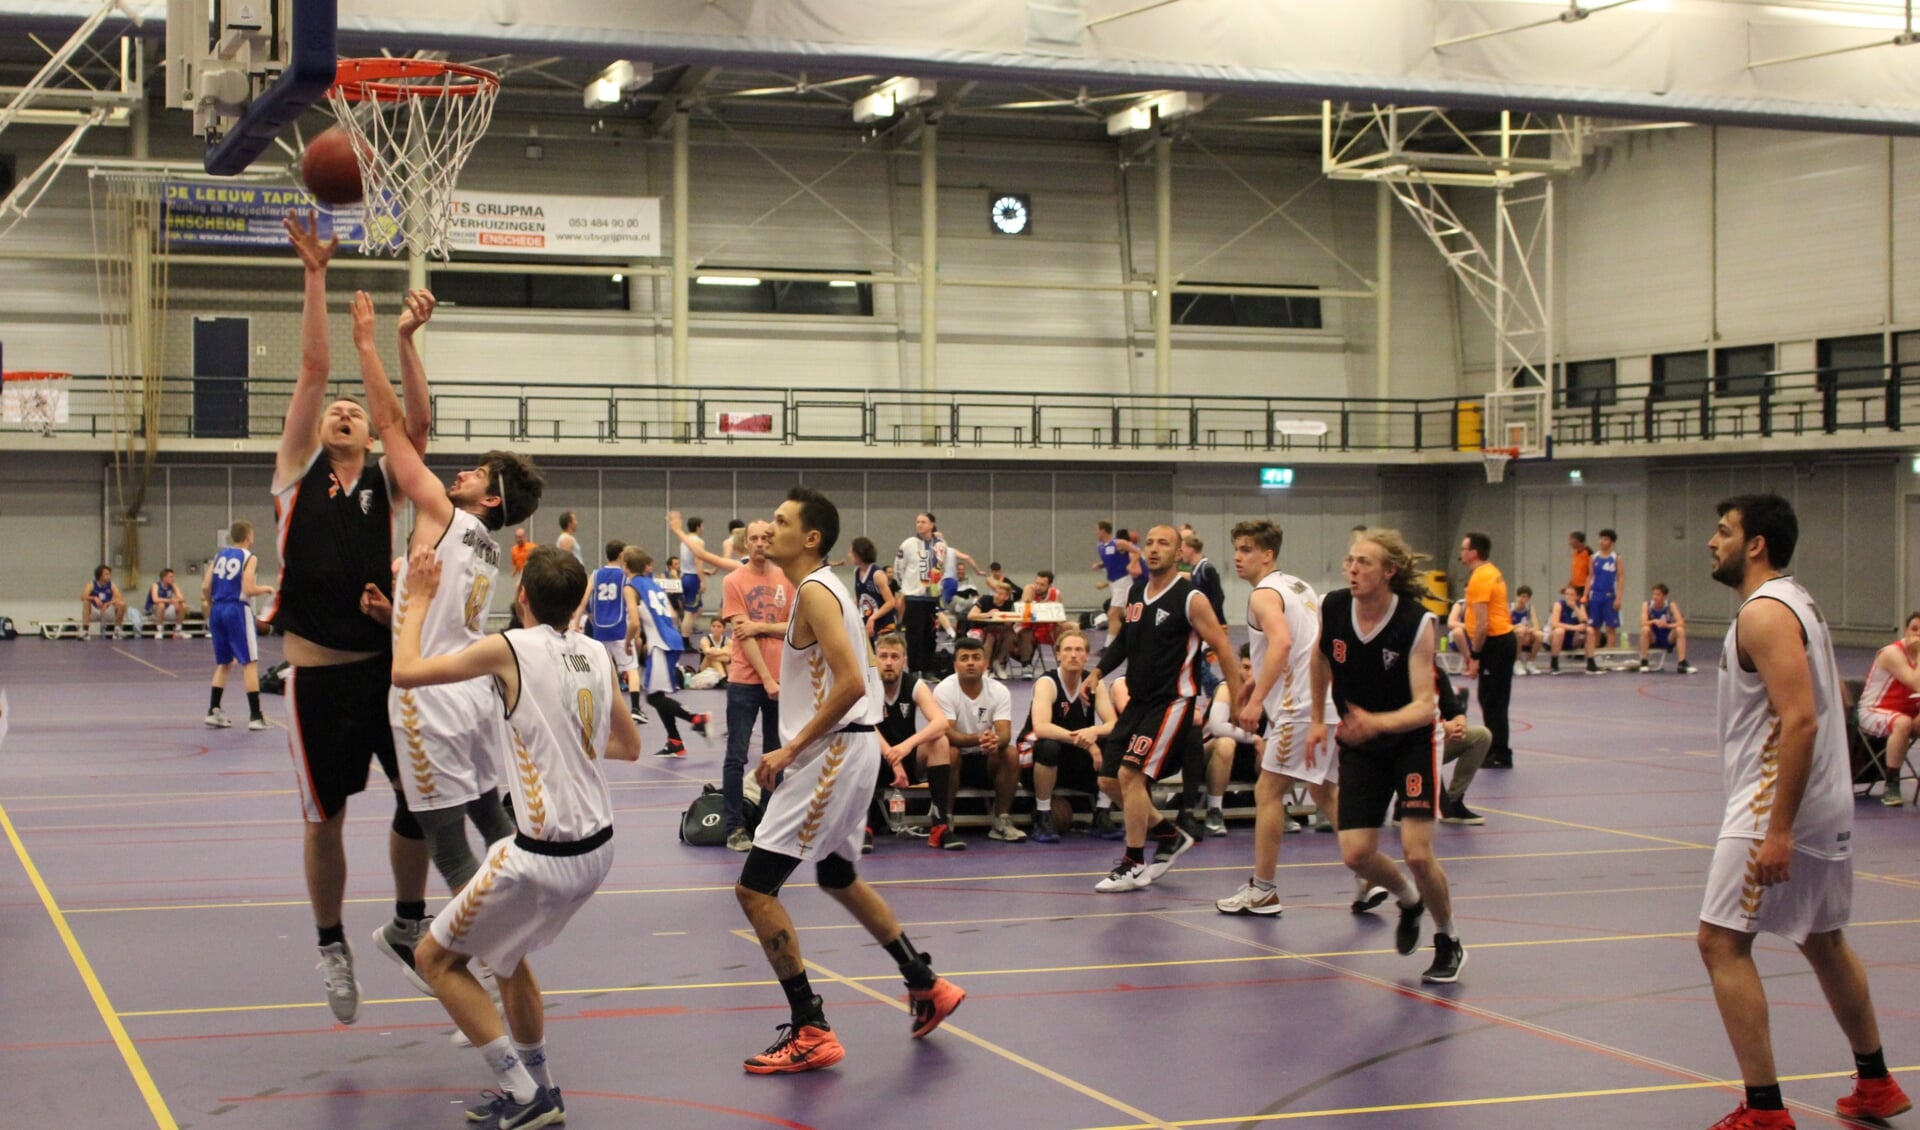 Twee dagen basketbal in de Diekmanhal vanwege het Amicaltoernooi.